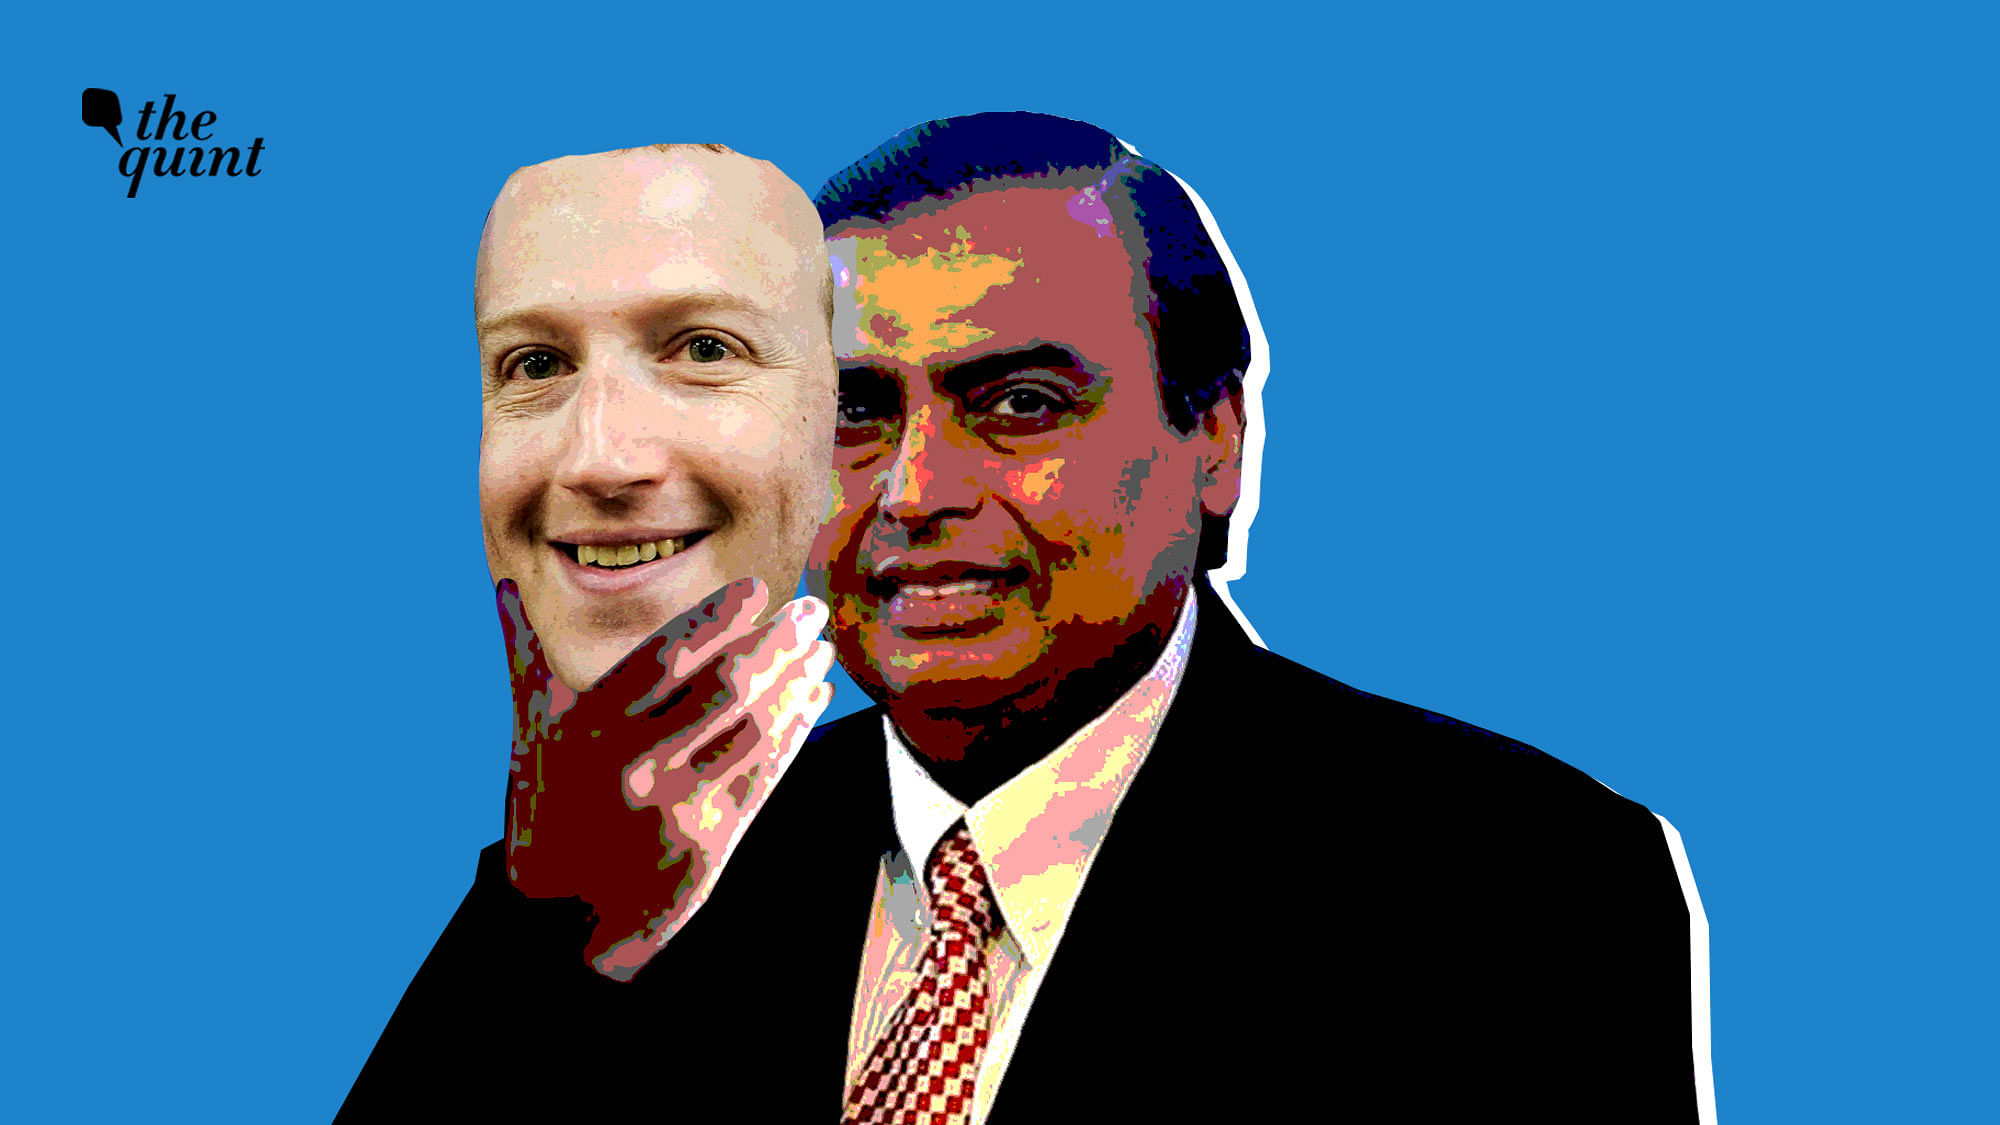 Facebook boss Mark Zuckerberg &amp; Mukesh Ambani seal the world’s biggest tech tie-up deal to capture the market place.